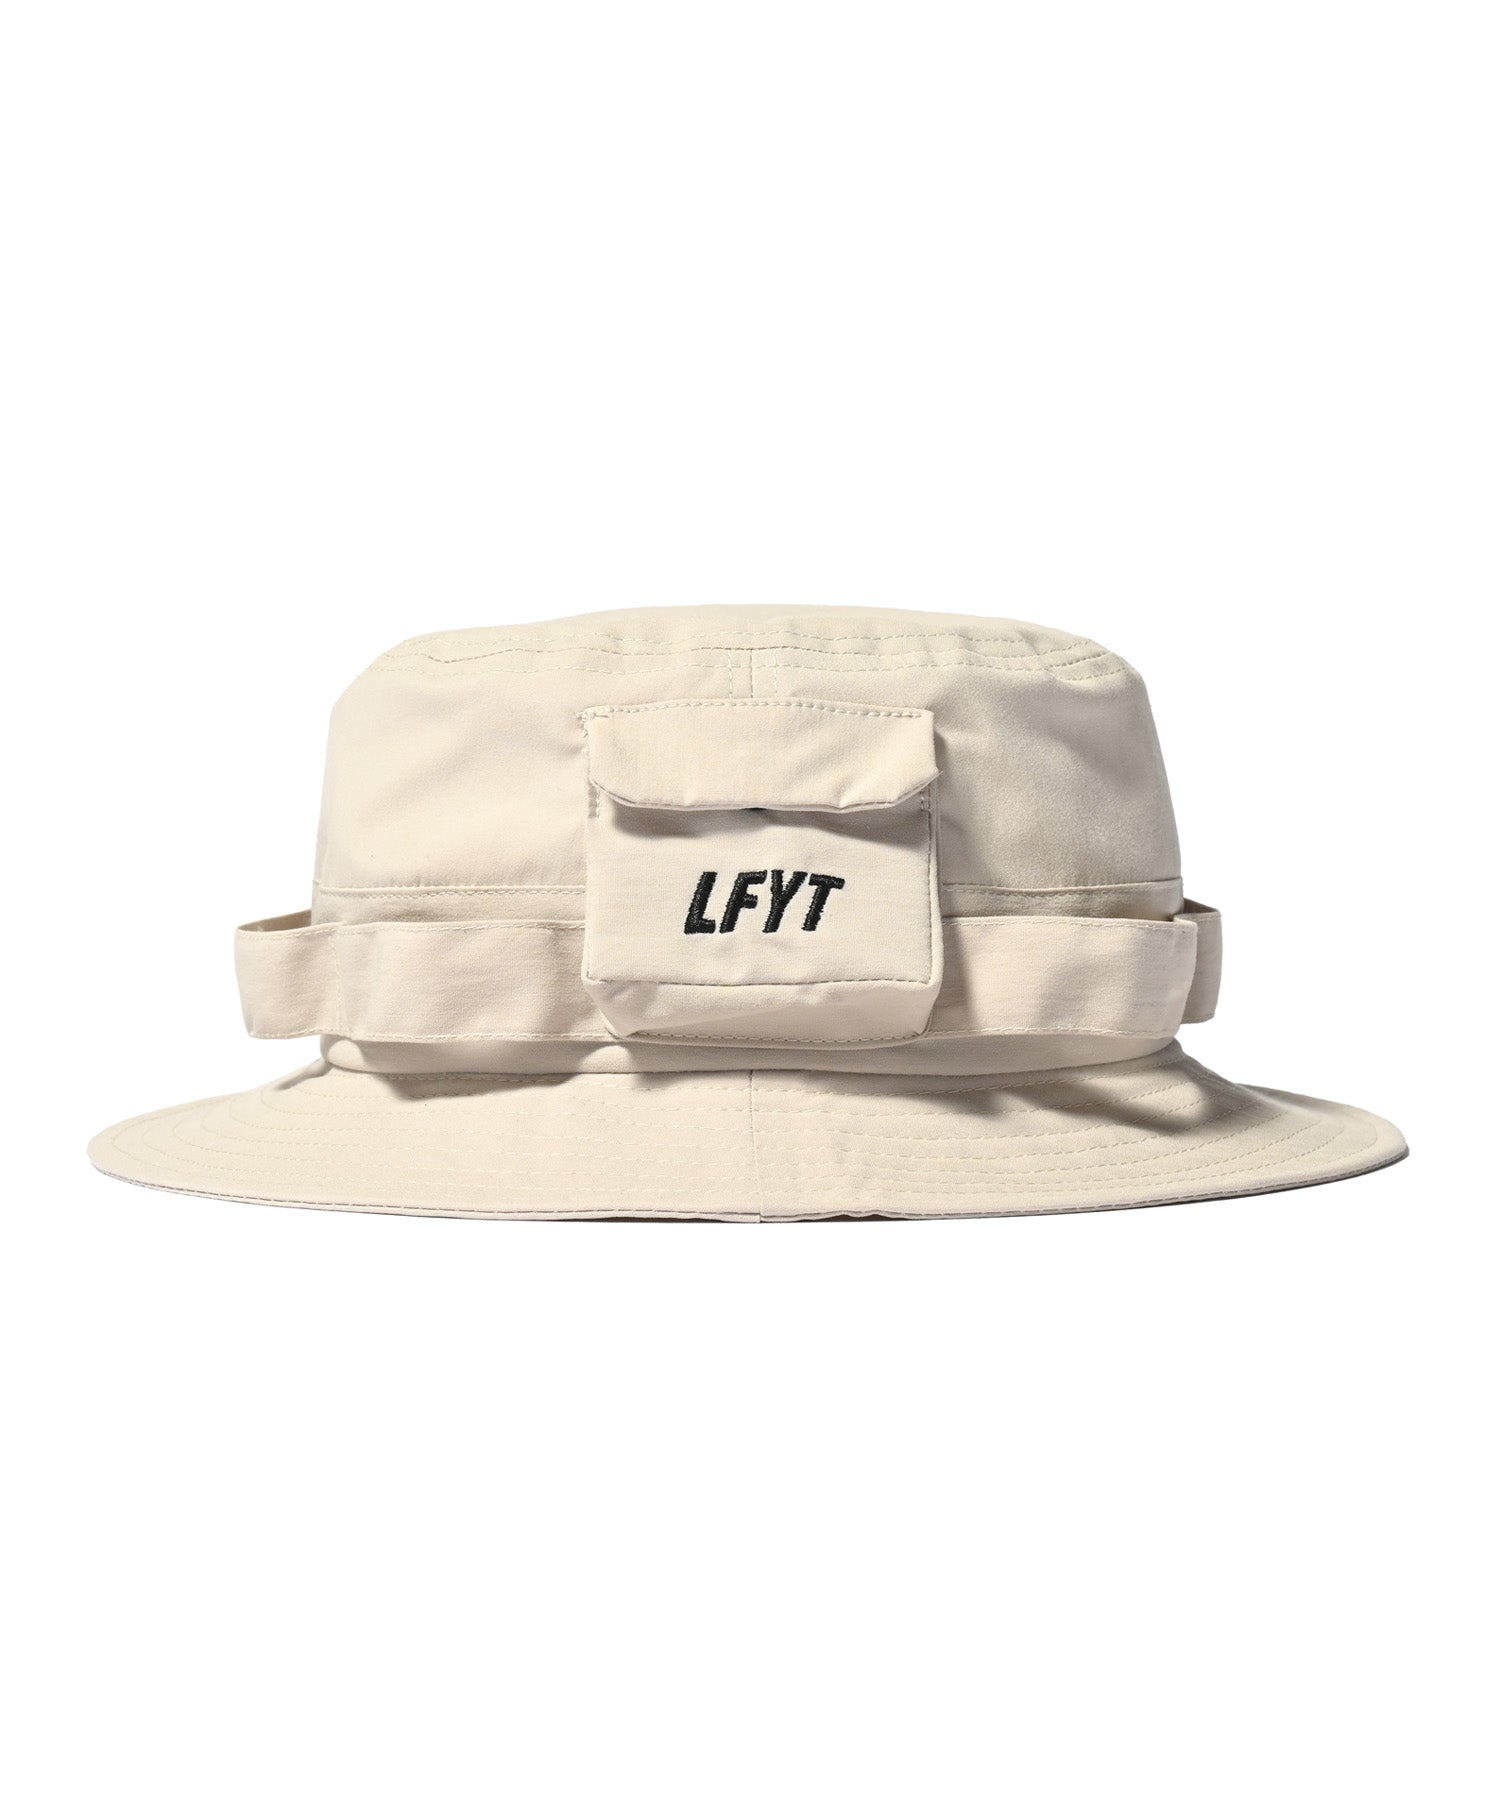 LFYT TACTICAL BOONIE HAT LS231408